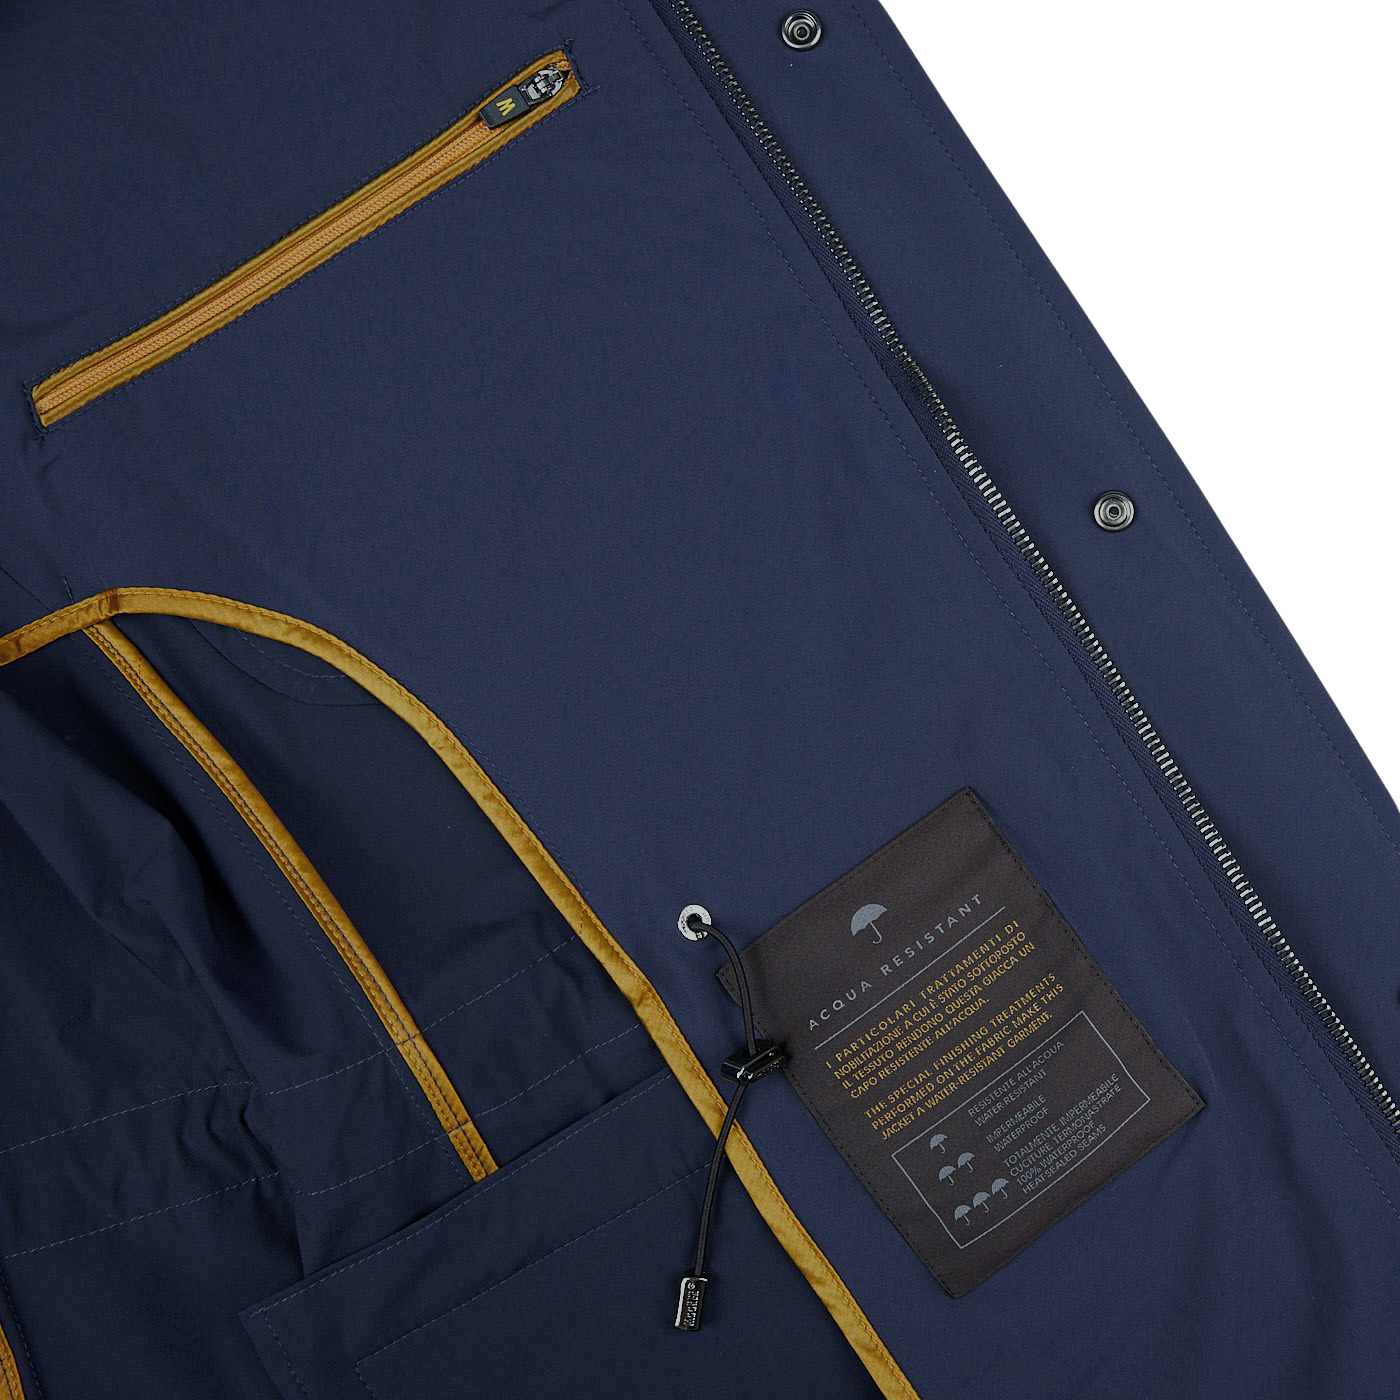 A Moorer Dark Blue Lightweight Nylon Field Jacket with a zippered pocket.